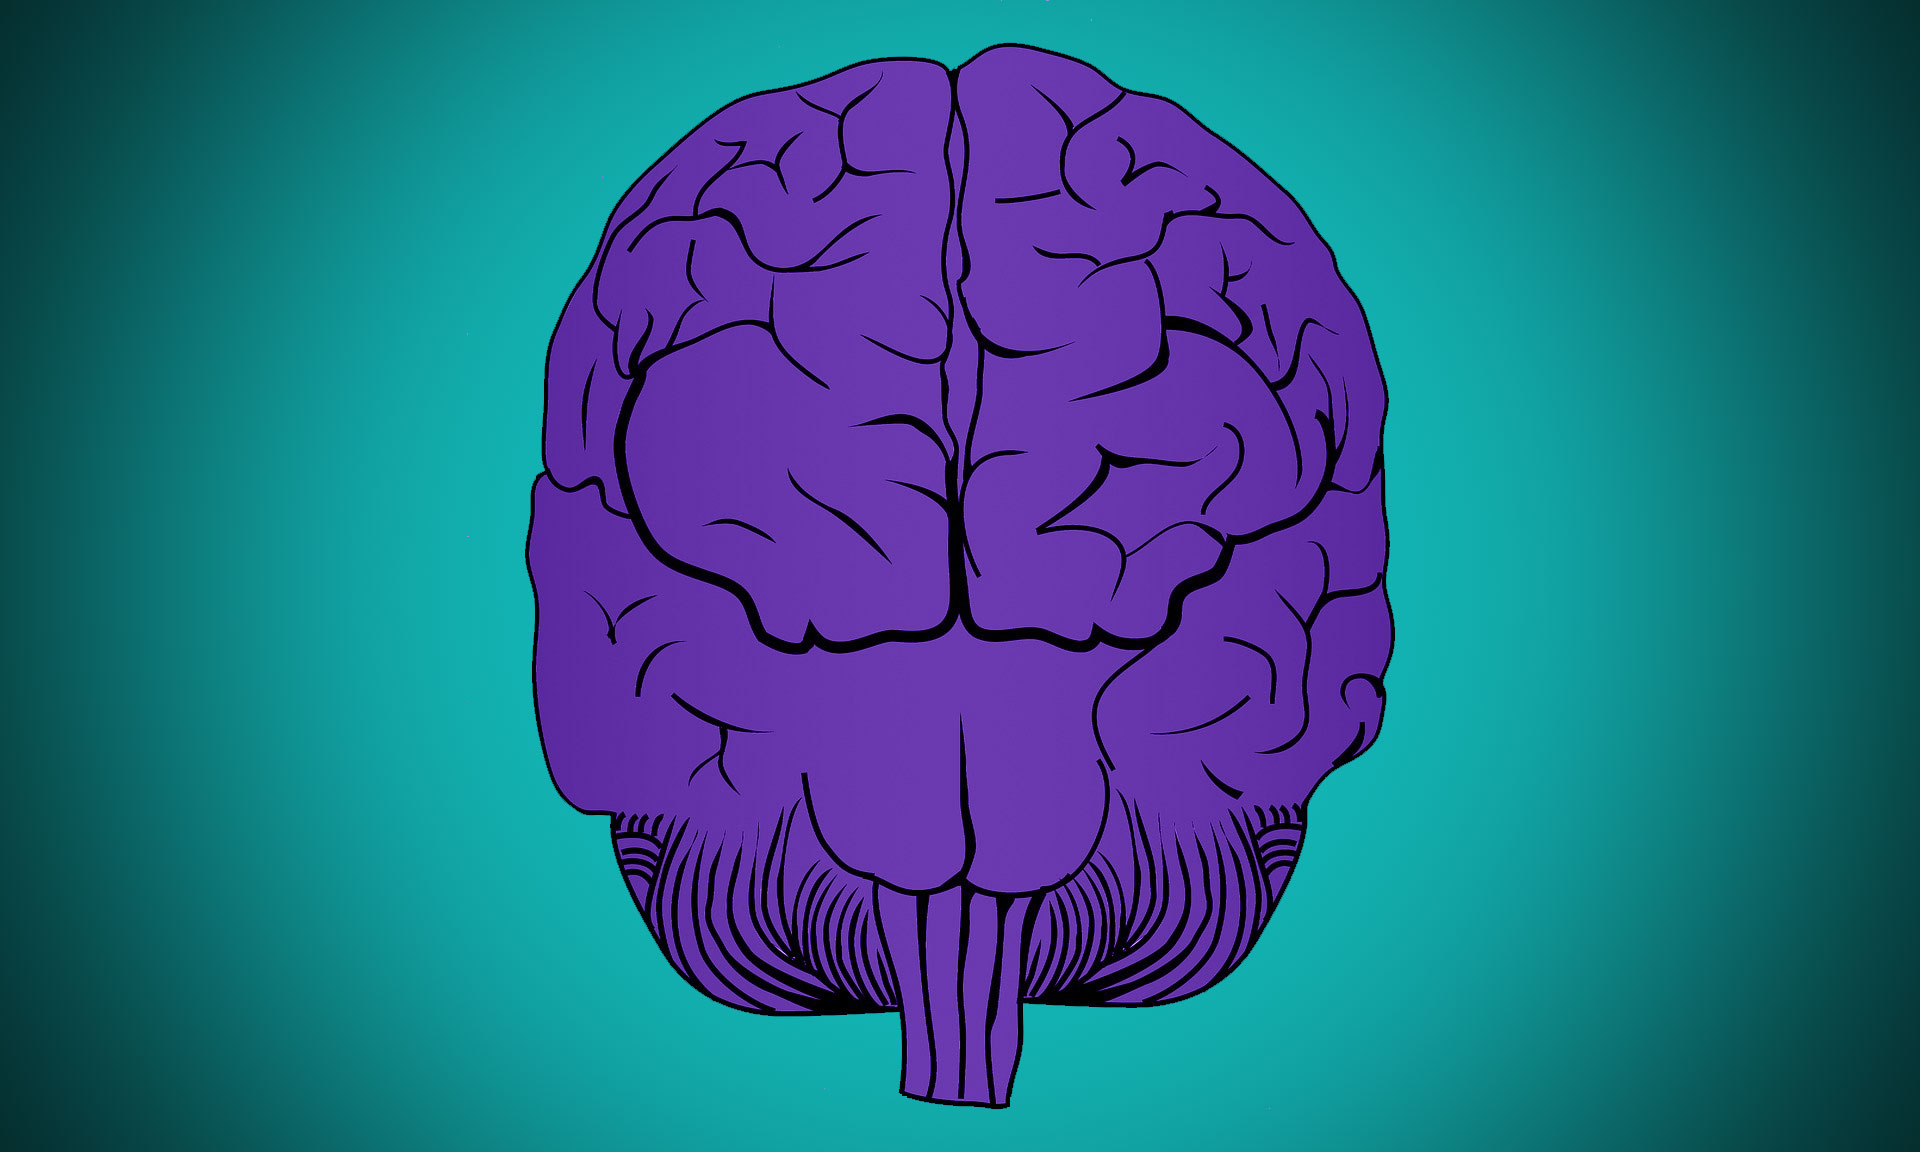 Decorative image of a brain